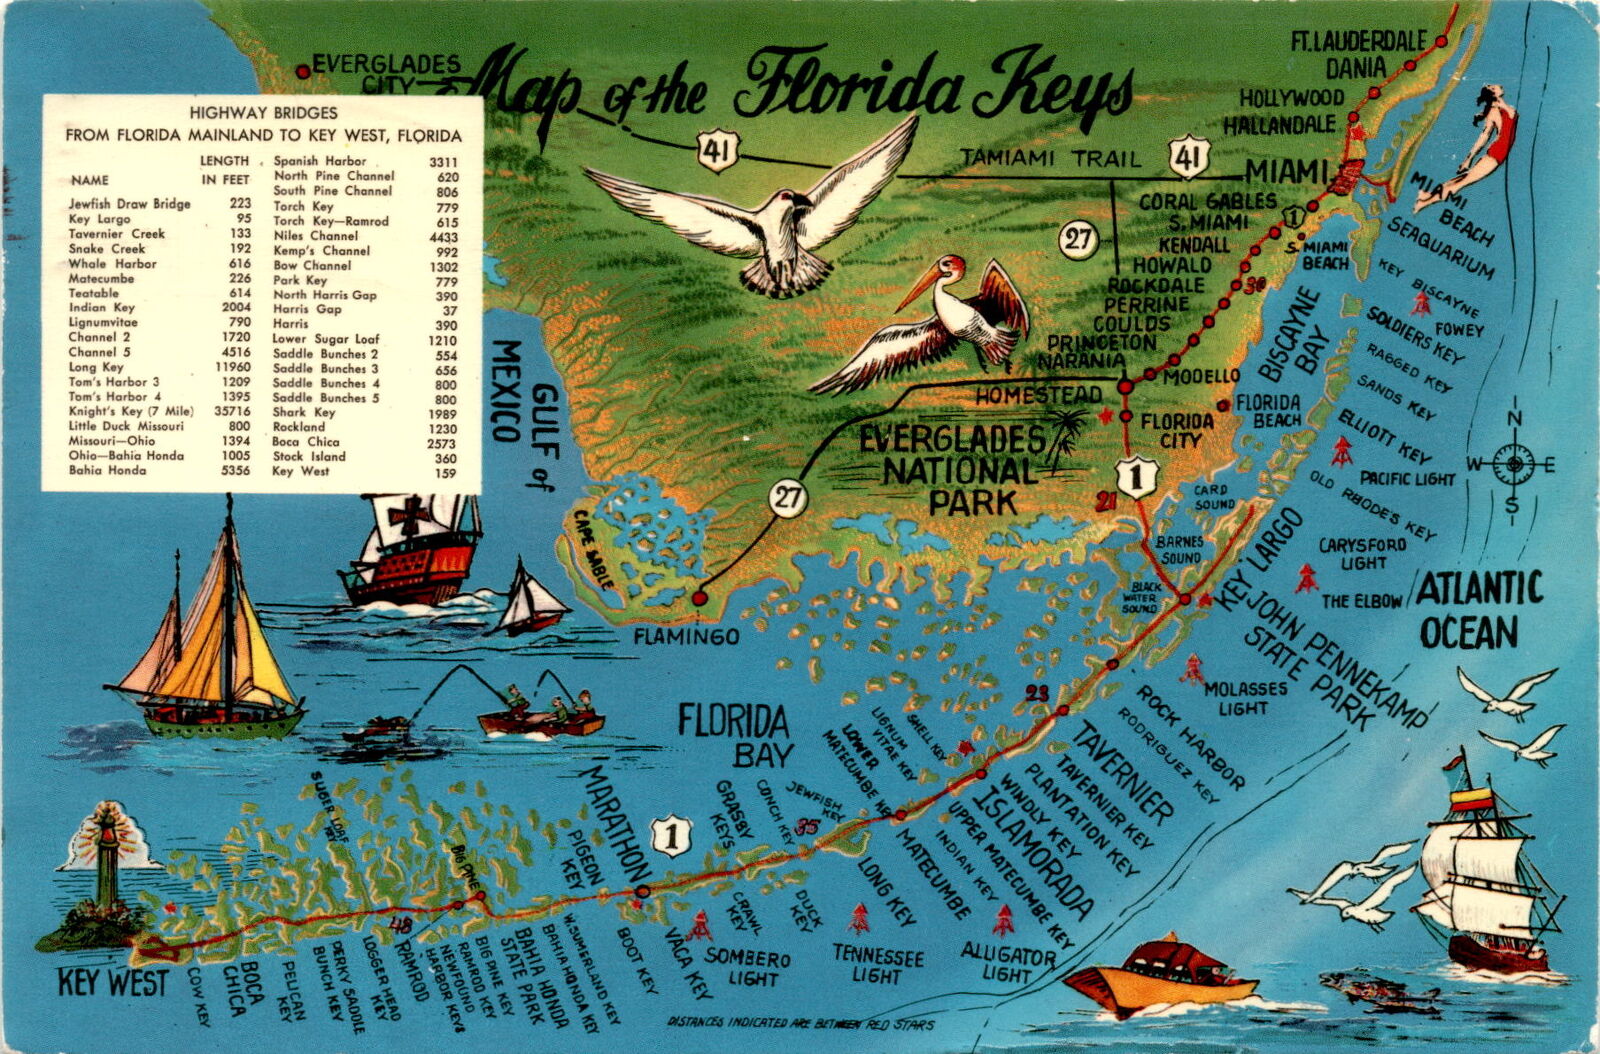 EVERGLADES CITY, HIGHWAY BRIDGES, FLORIDA MAINLAND TO KEY WEST Postcard